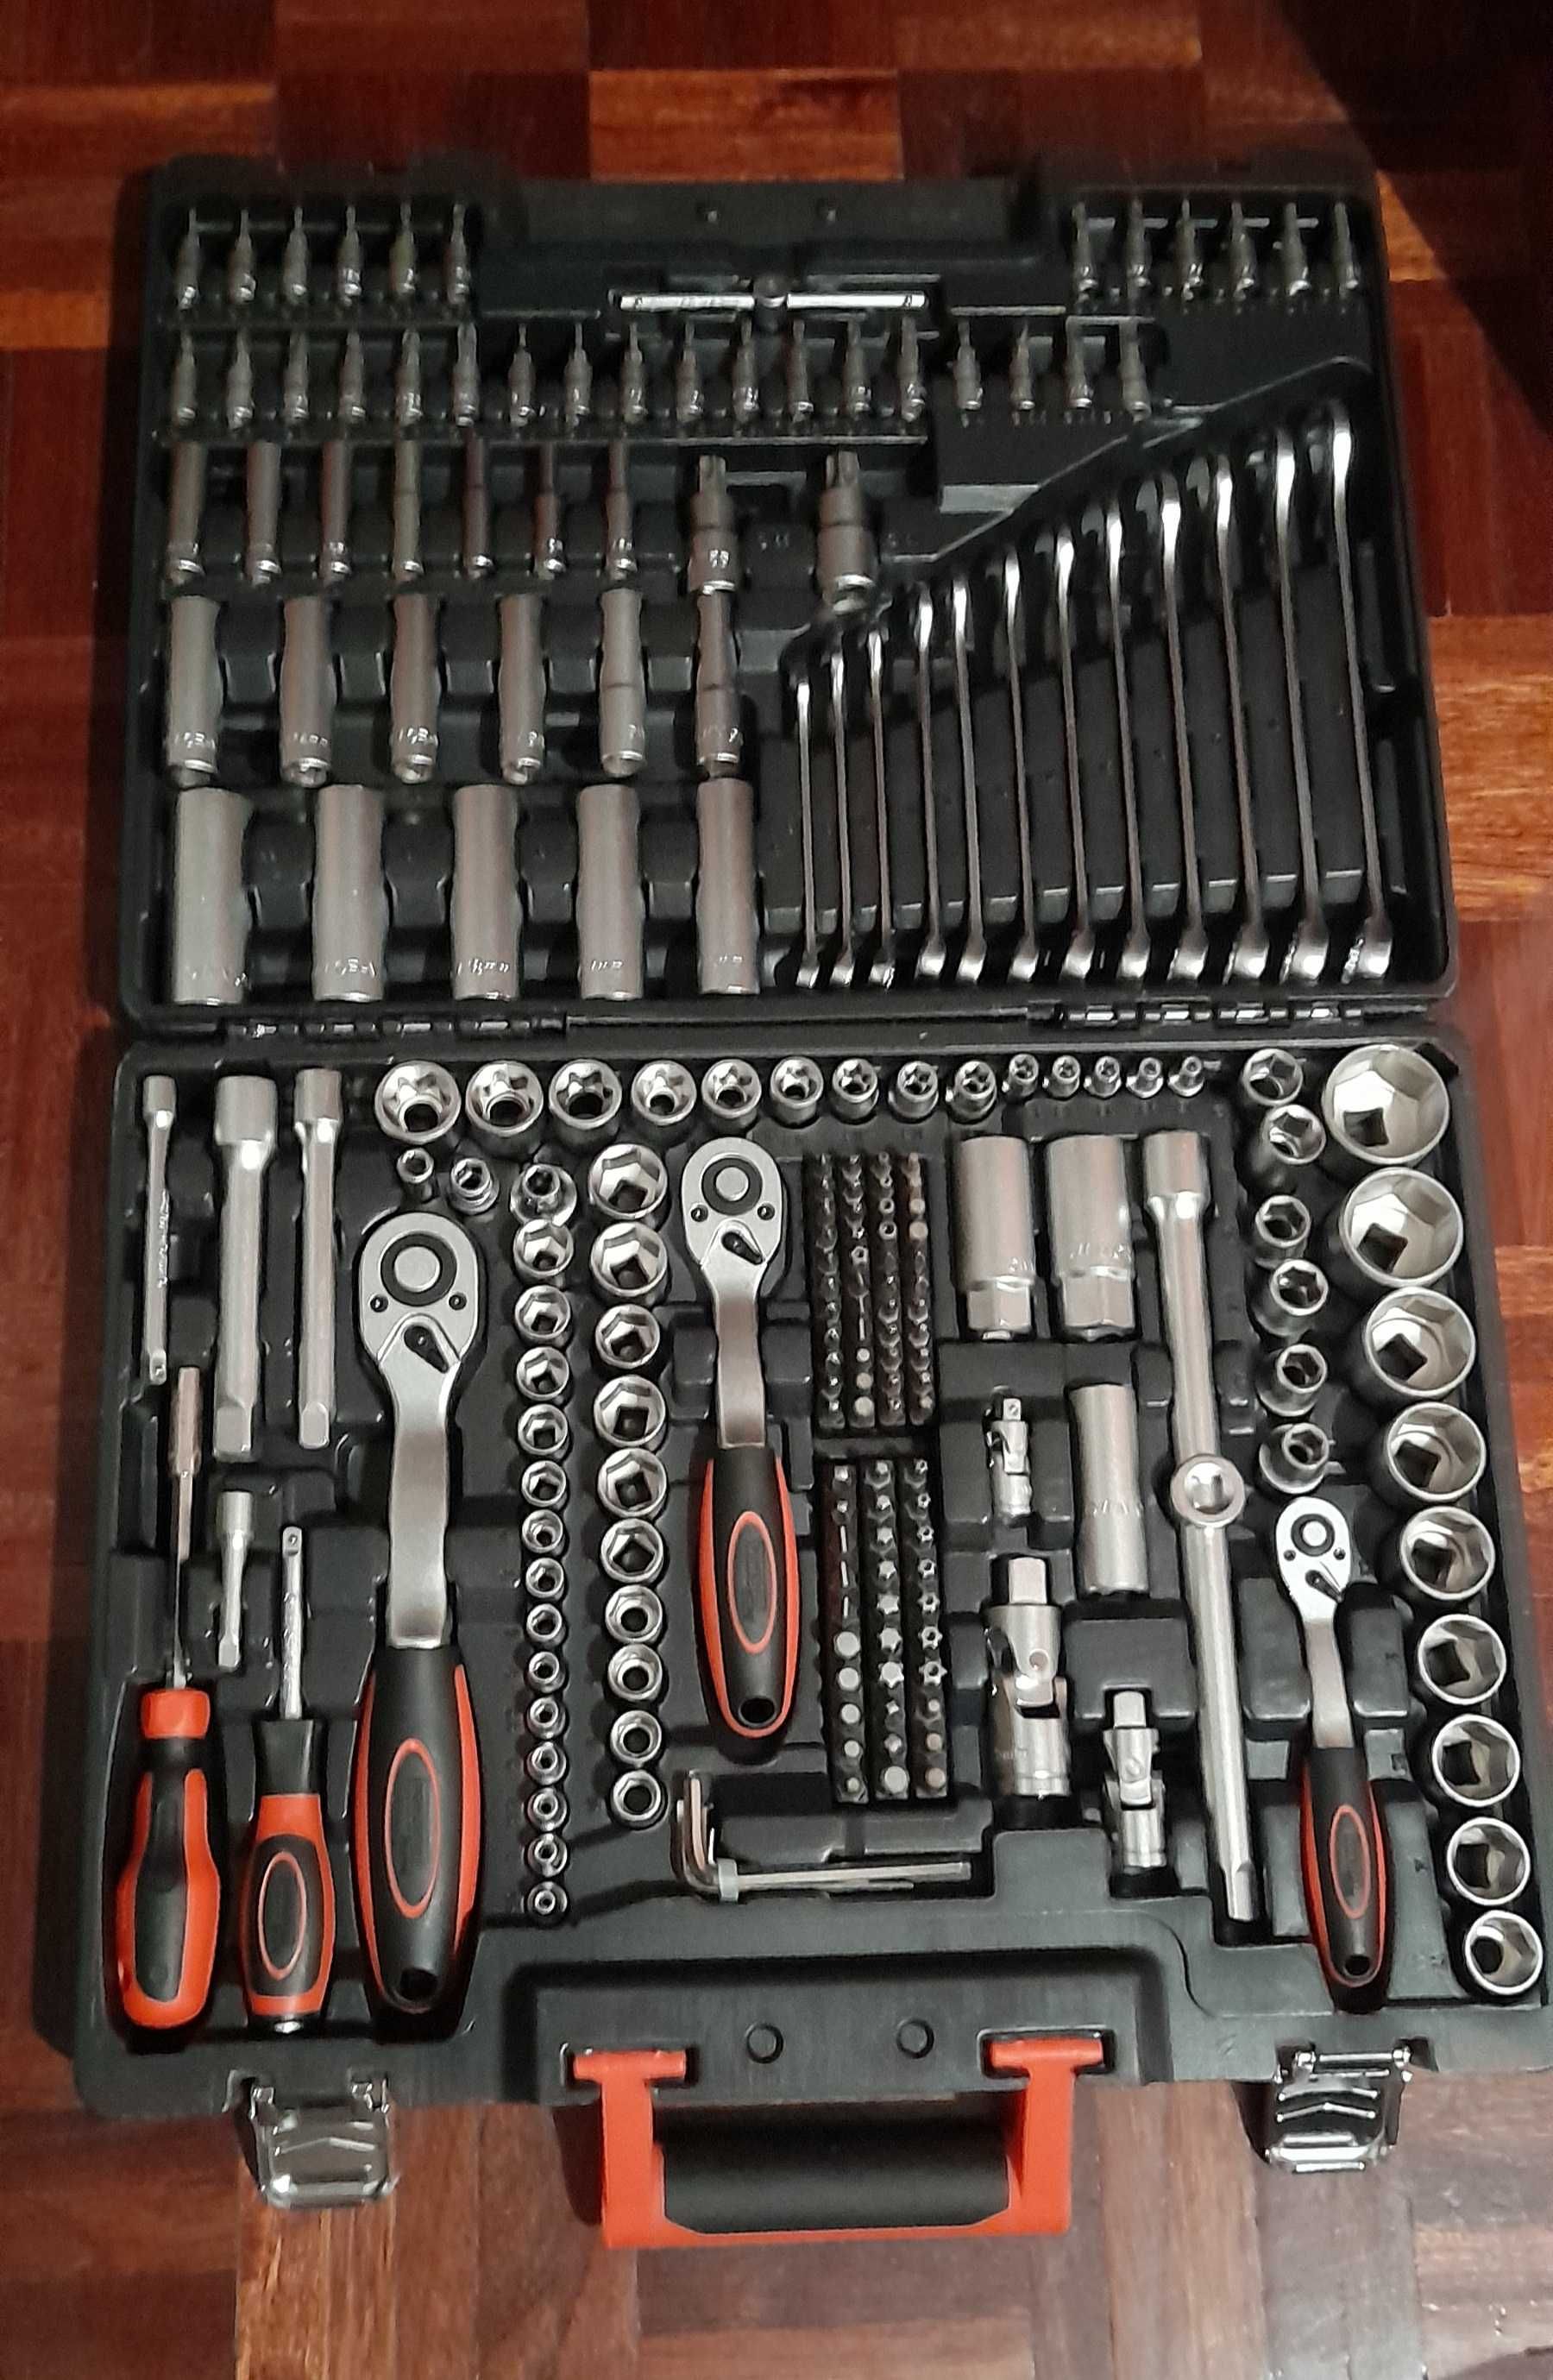 Caixa de 216 ferramentas